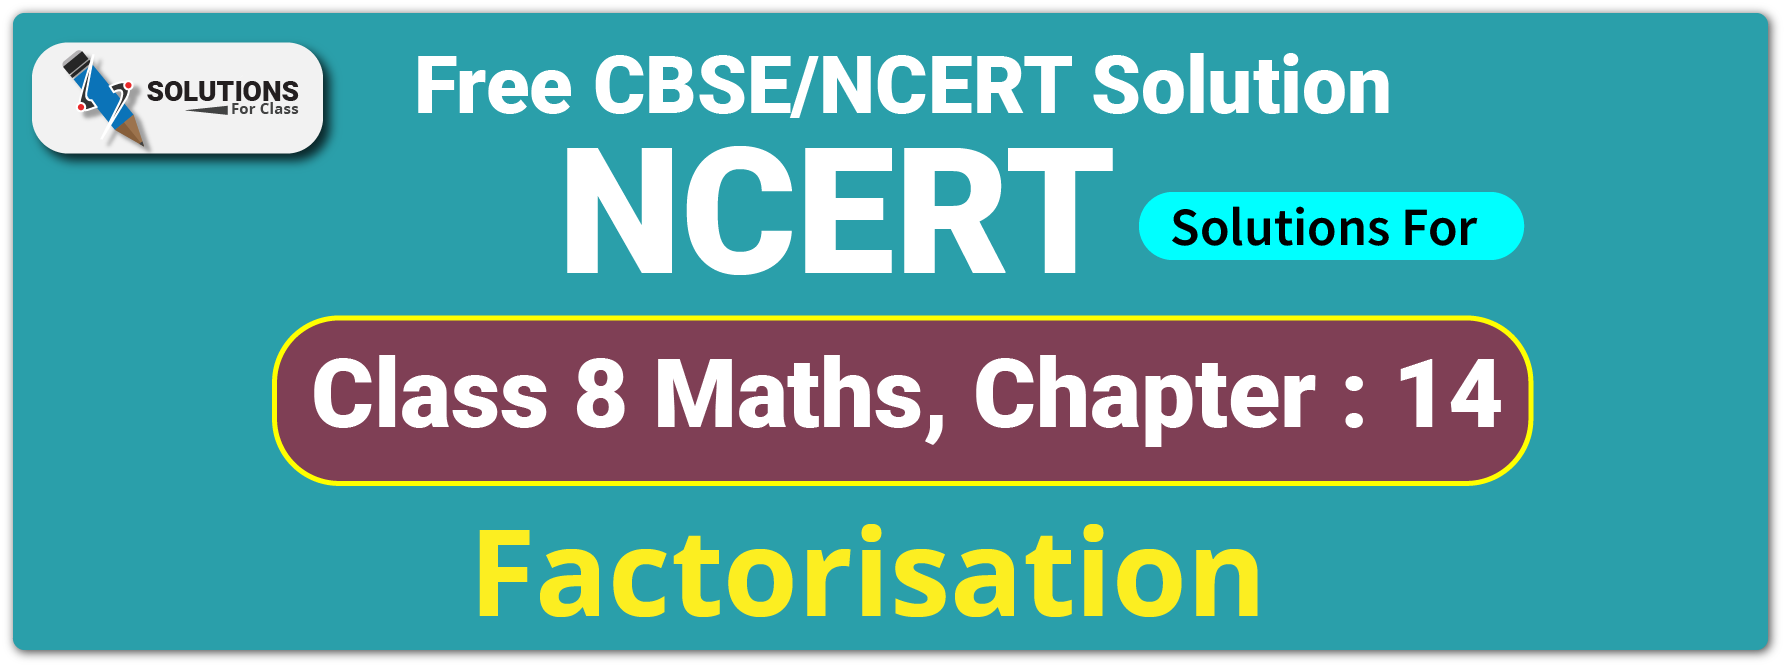 NCERT Solutions For Class 8 Chapter 14, Factorisation